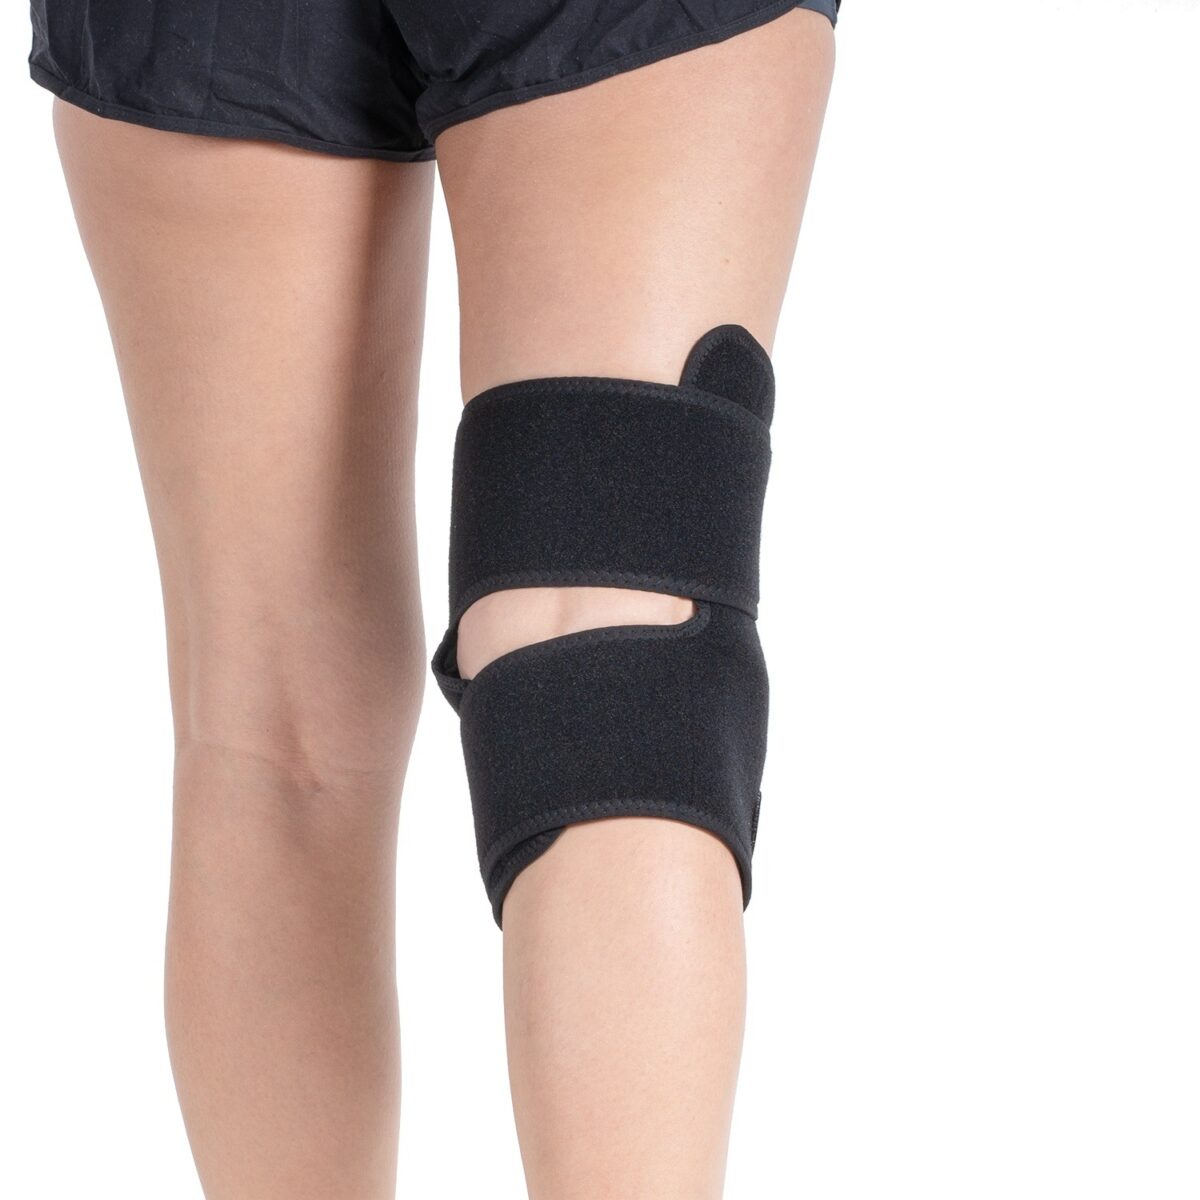 wingmed orthopedic equipments W538 ice bag knee support 51